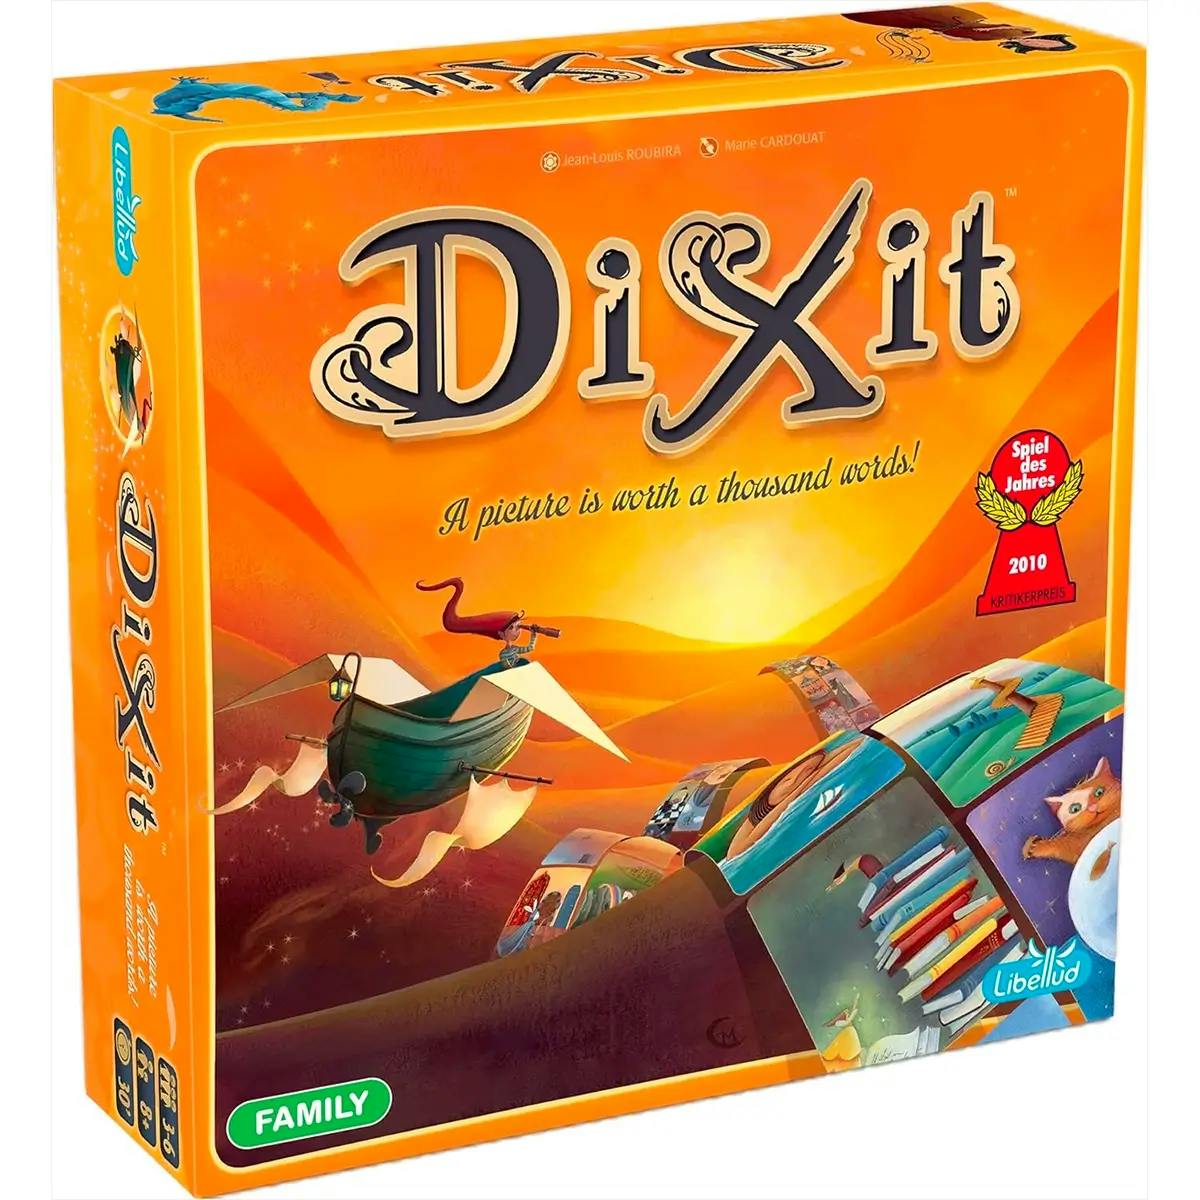 A Dixit game box.